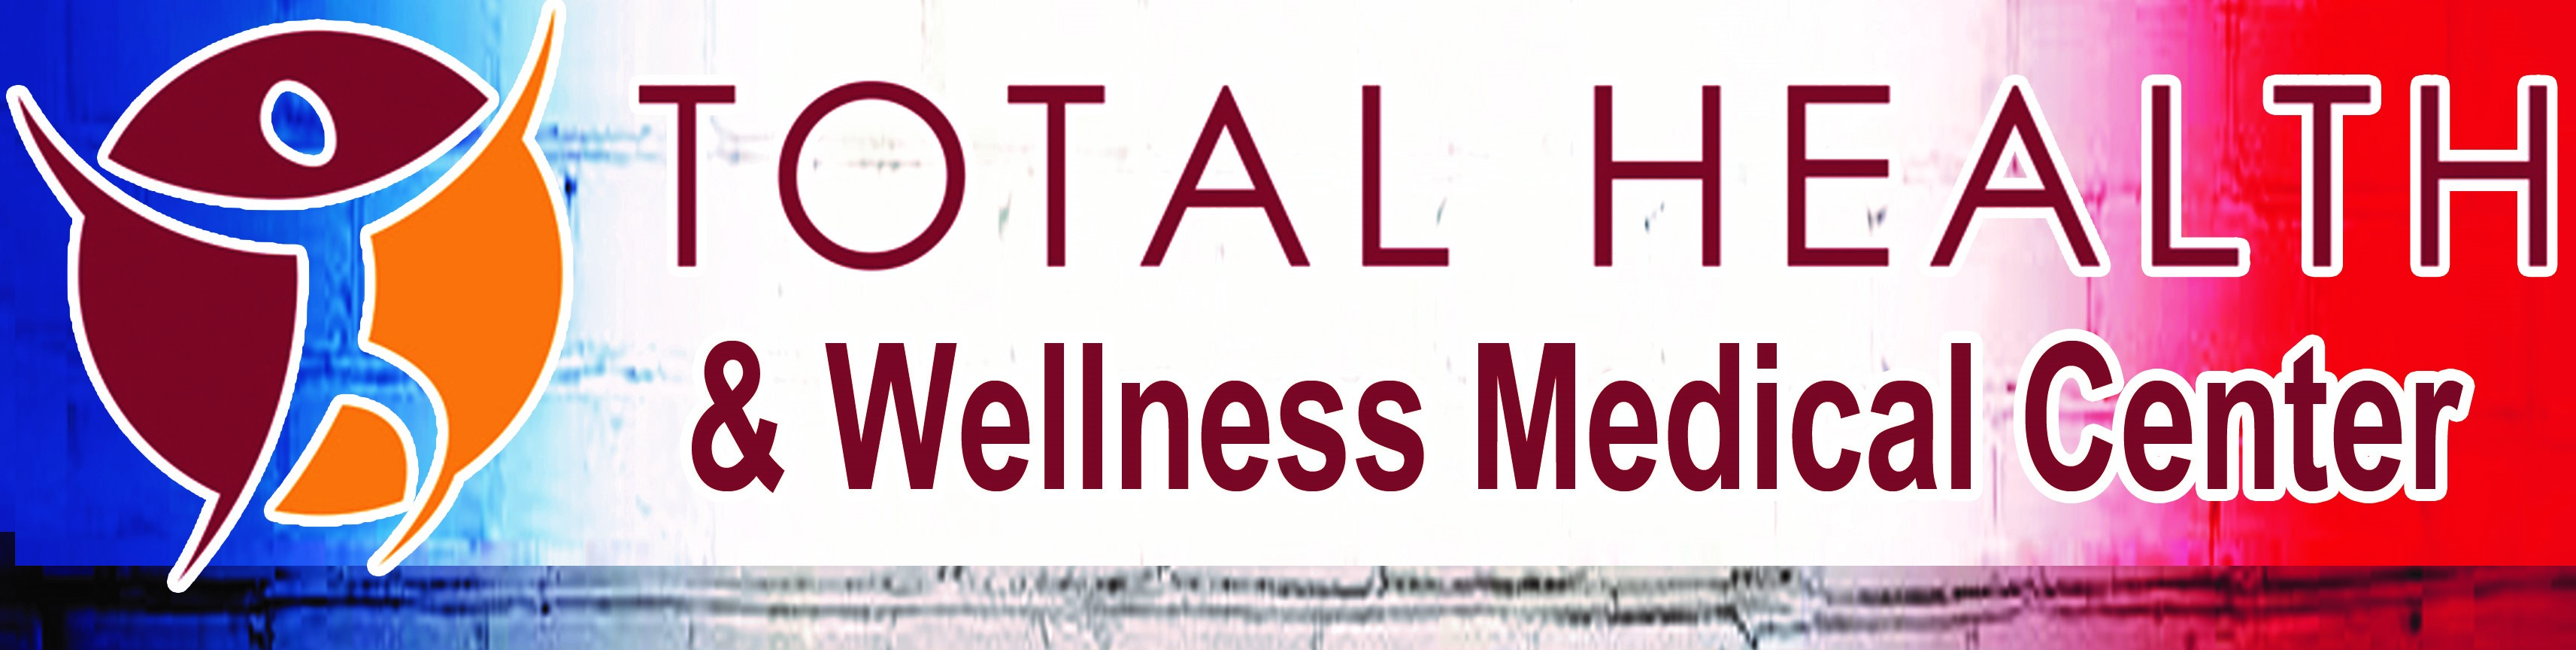 Total Health & Wellness Medical Center